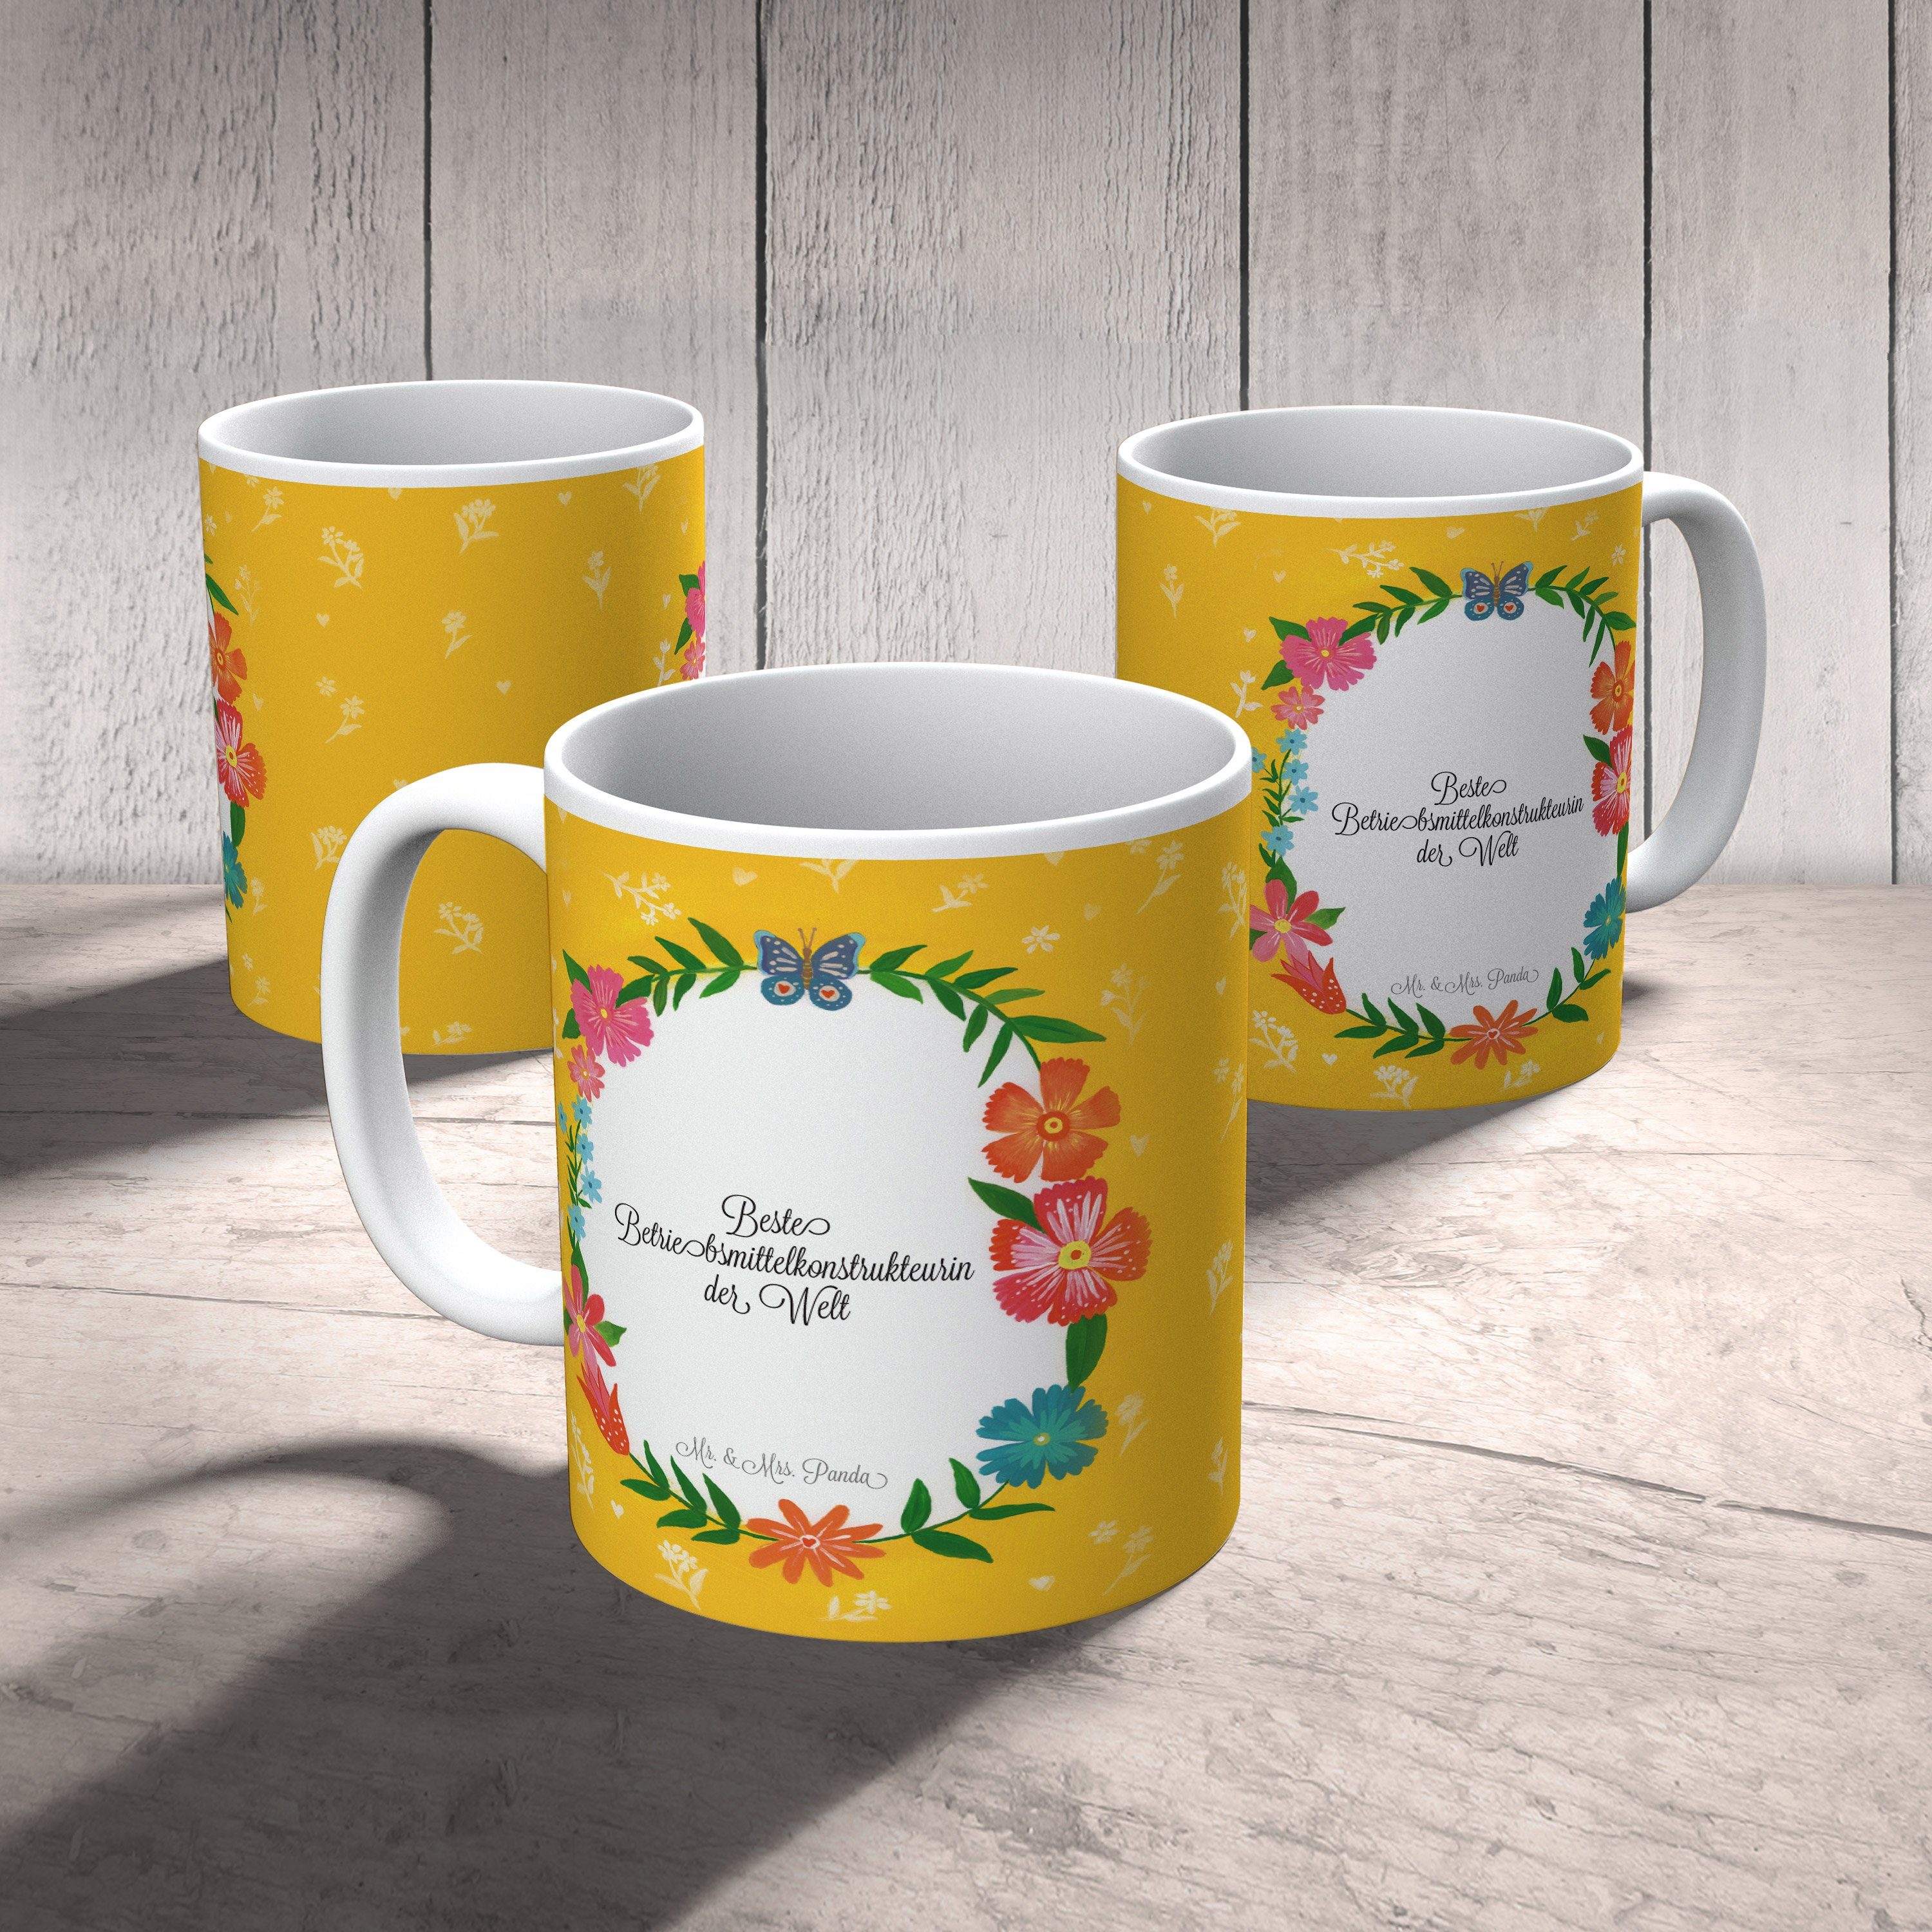 Mr. & Mrs. Panda - Tasse, Tasse Schenken, Geschenk, Keramik Betriebsmittelkonstrukteurin Kaffeebeche